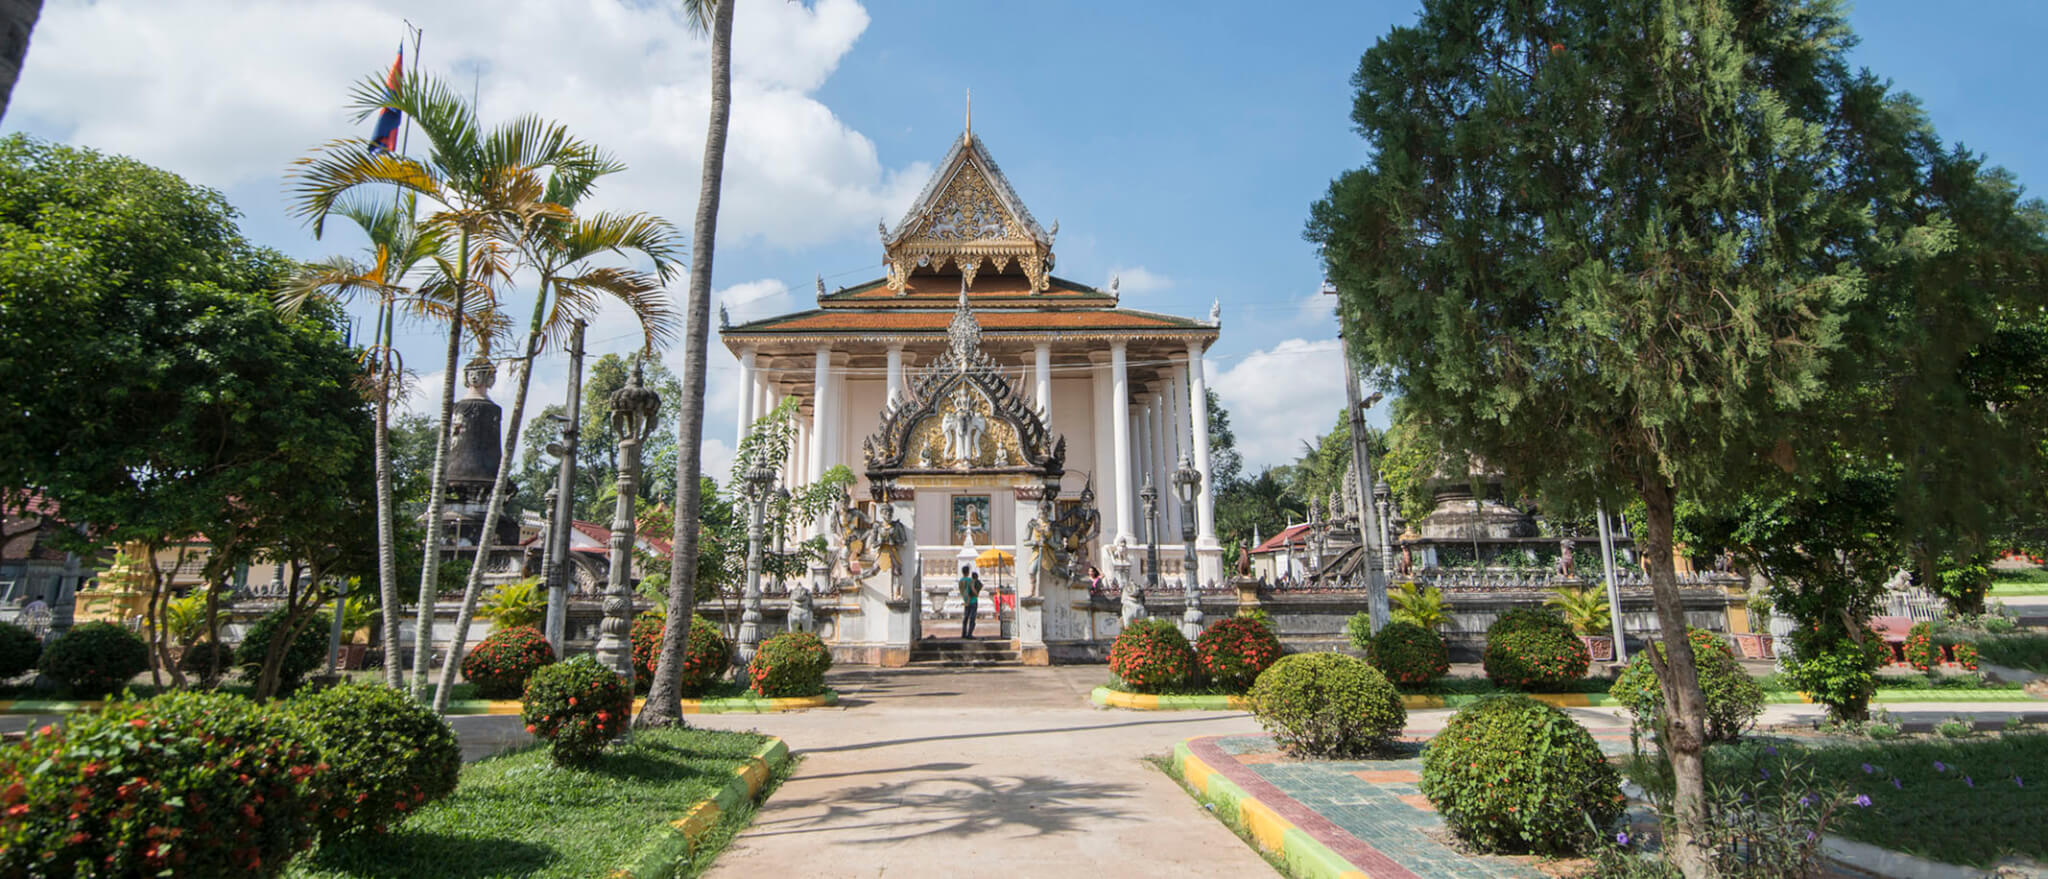 Battambang-banner.jpg